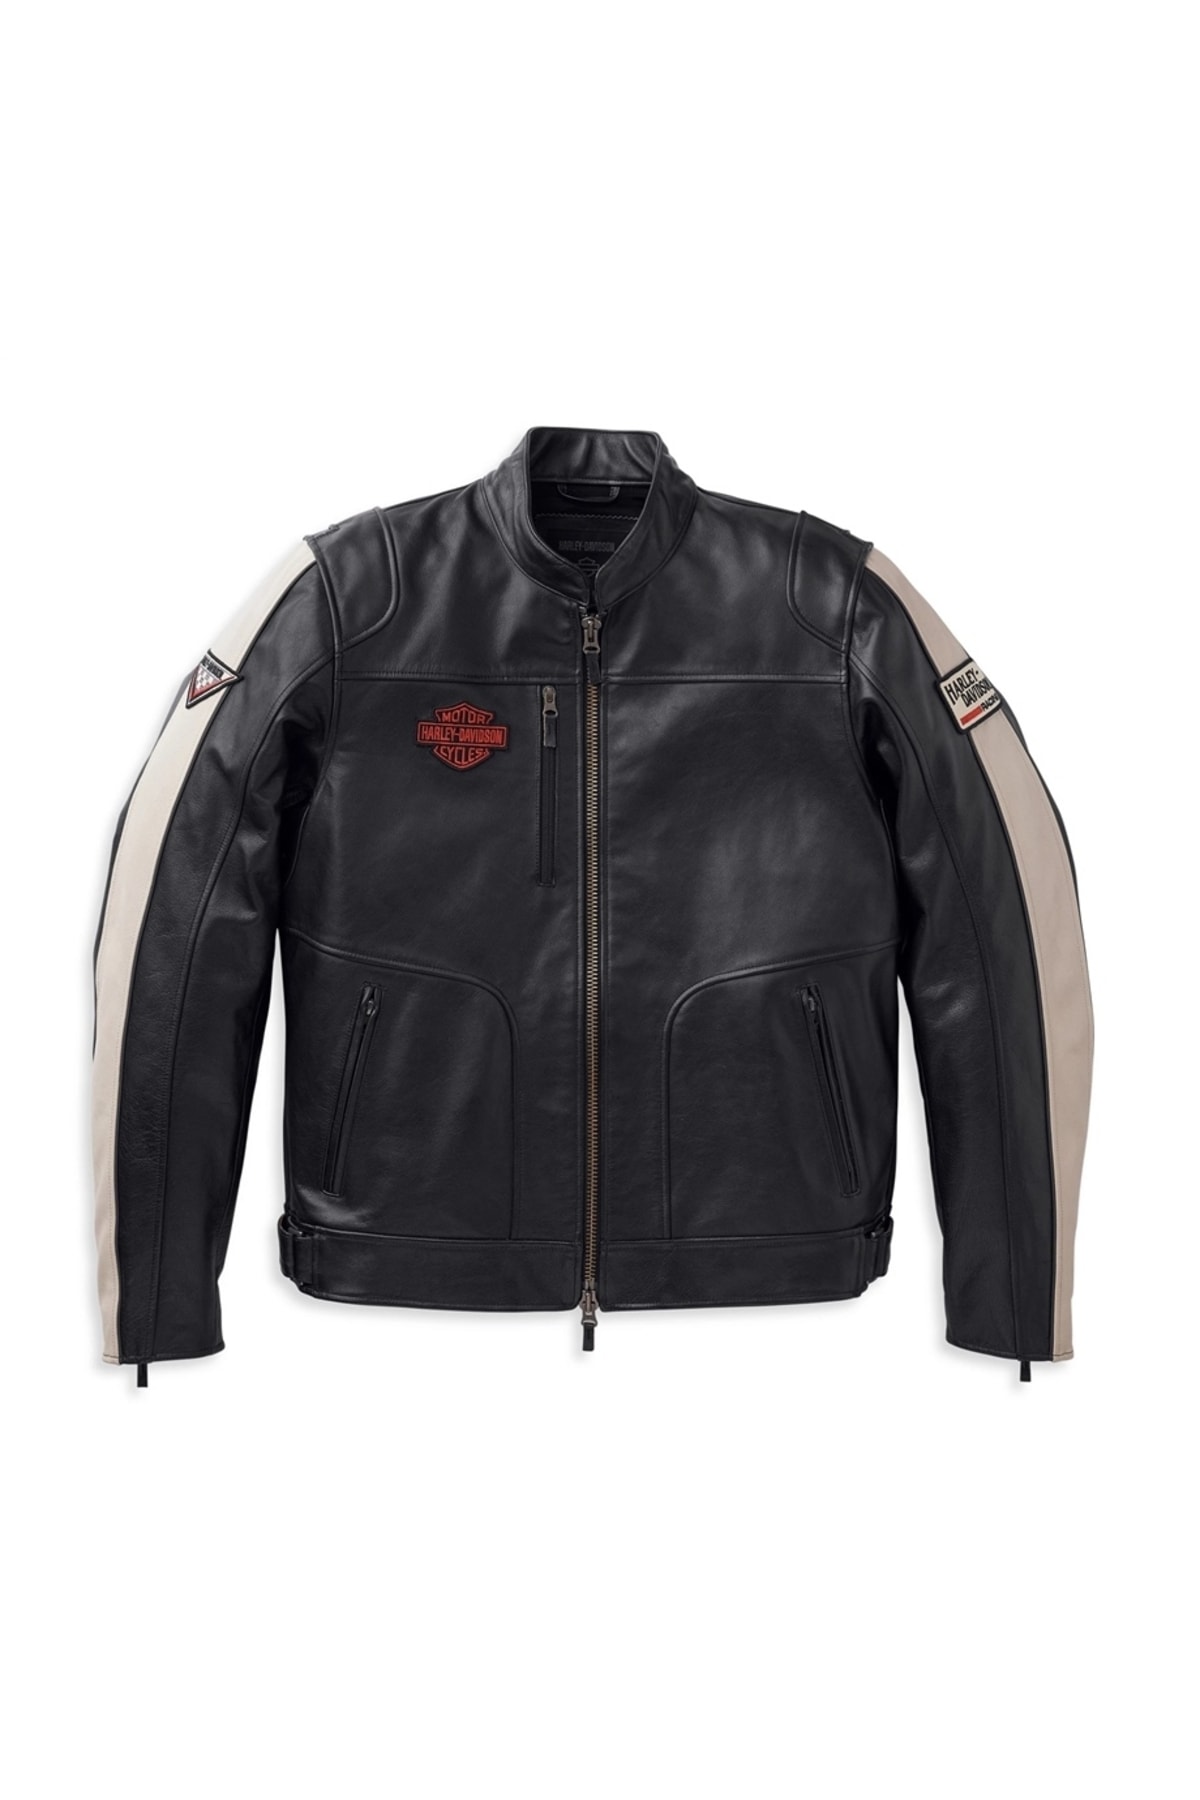 Harley Davidson Men's Enduro Leather Riding Jacket Ceket